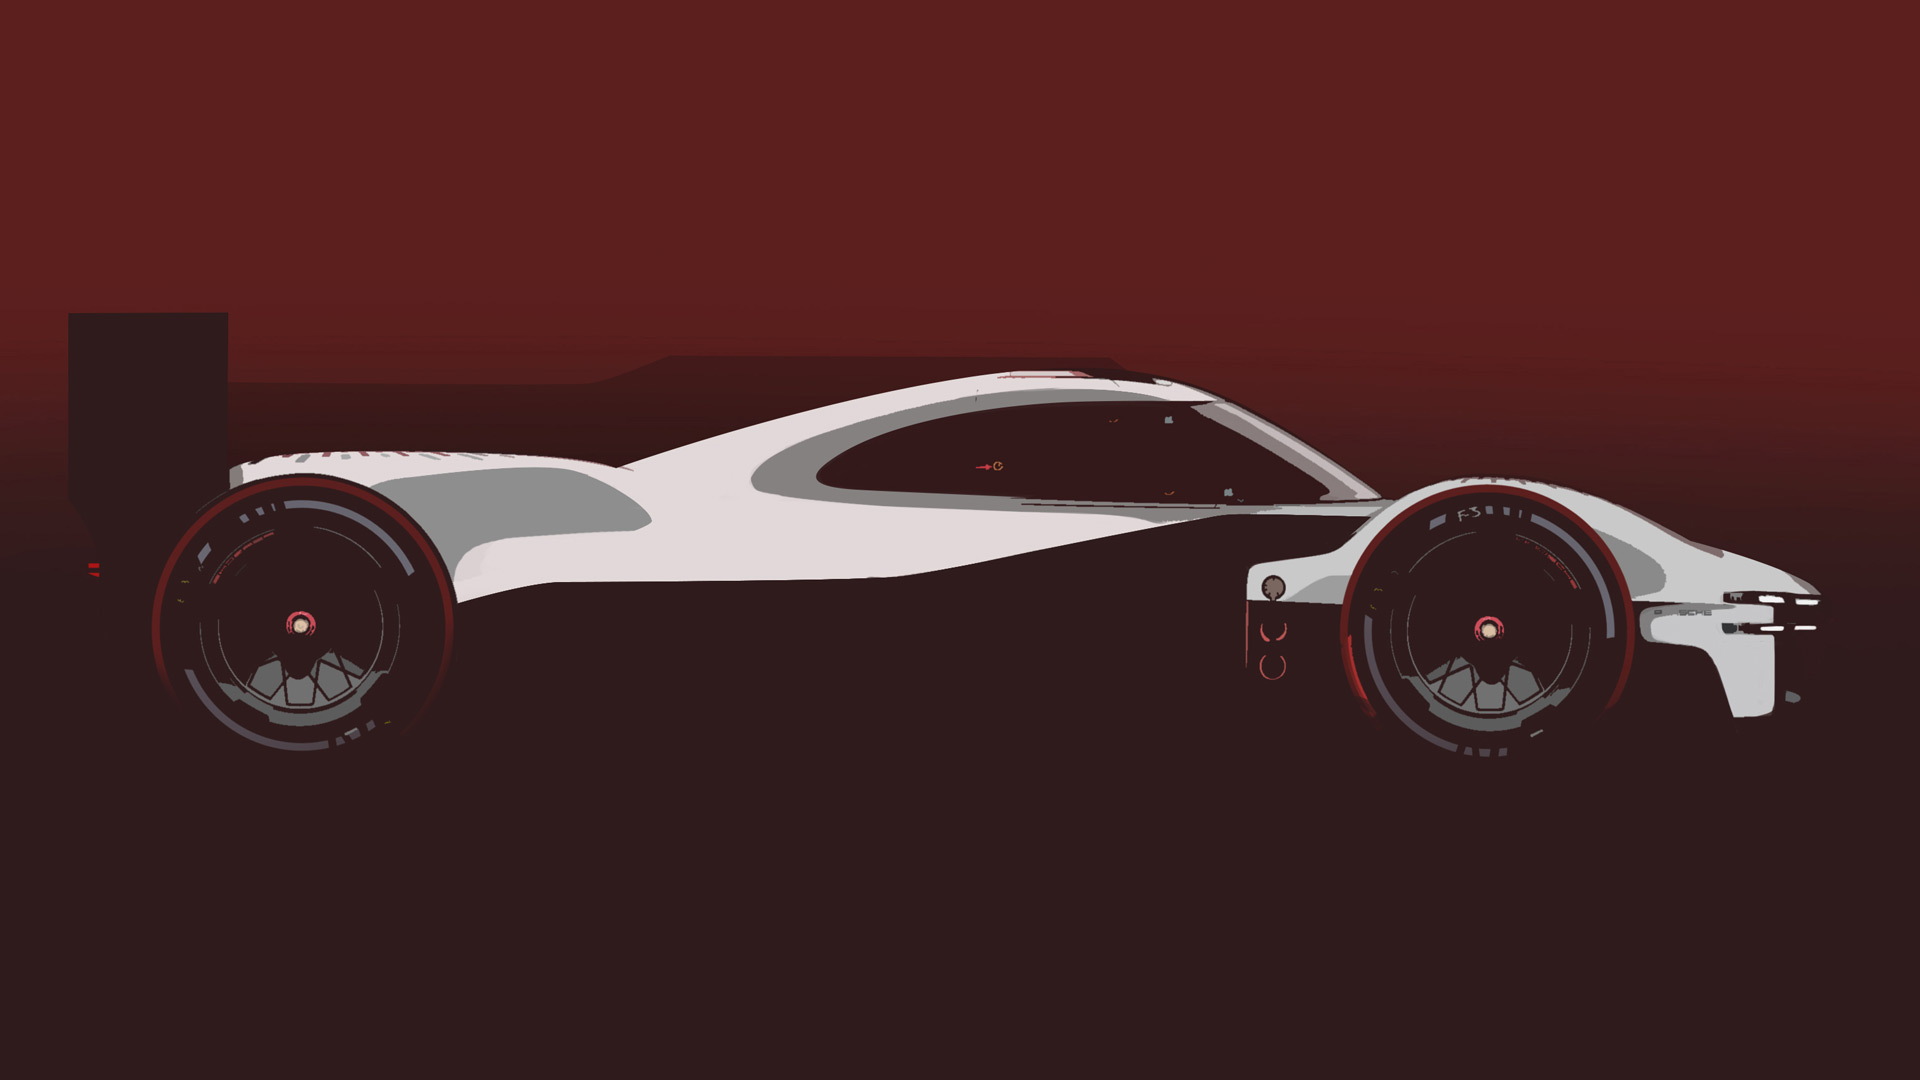 Artist's impression of 2023 Porsche LMDh race car